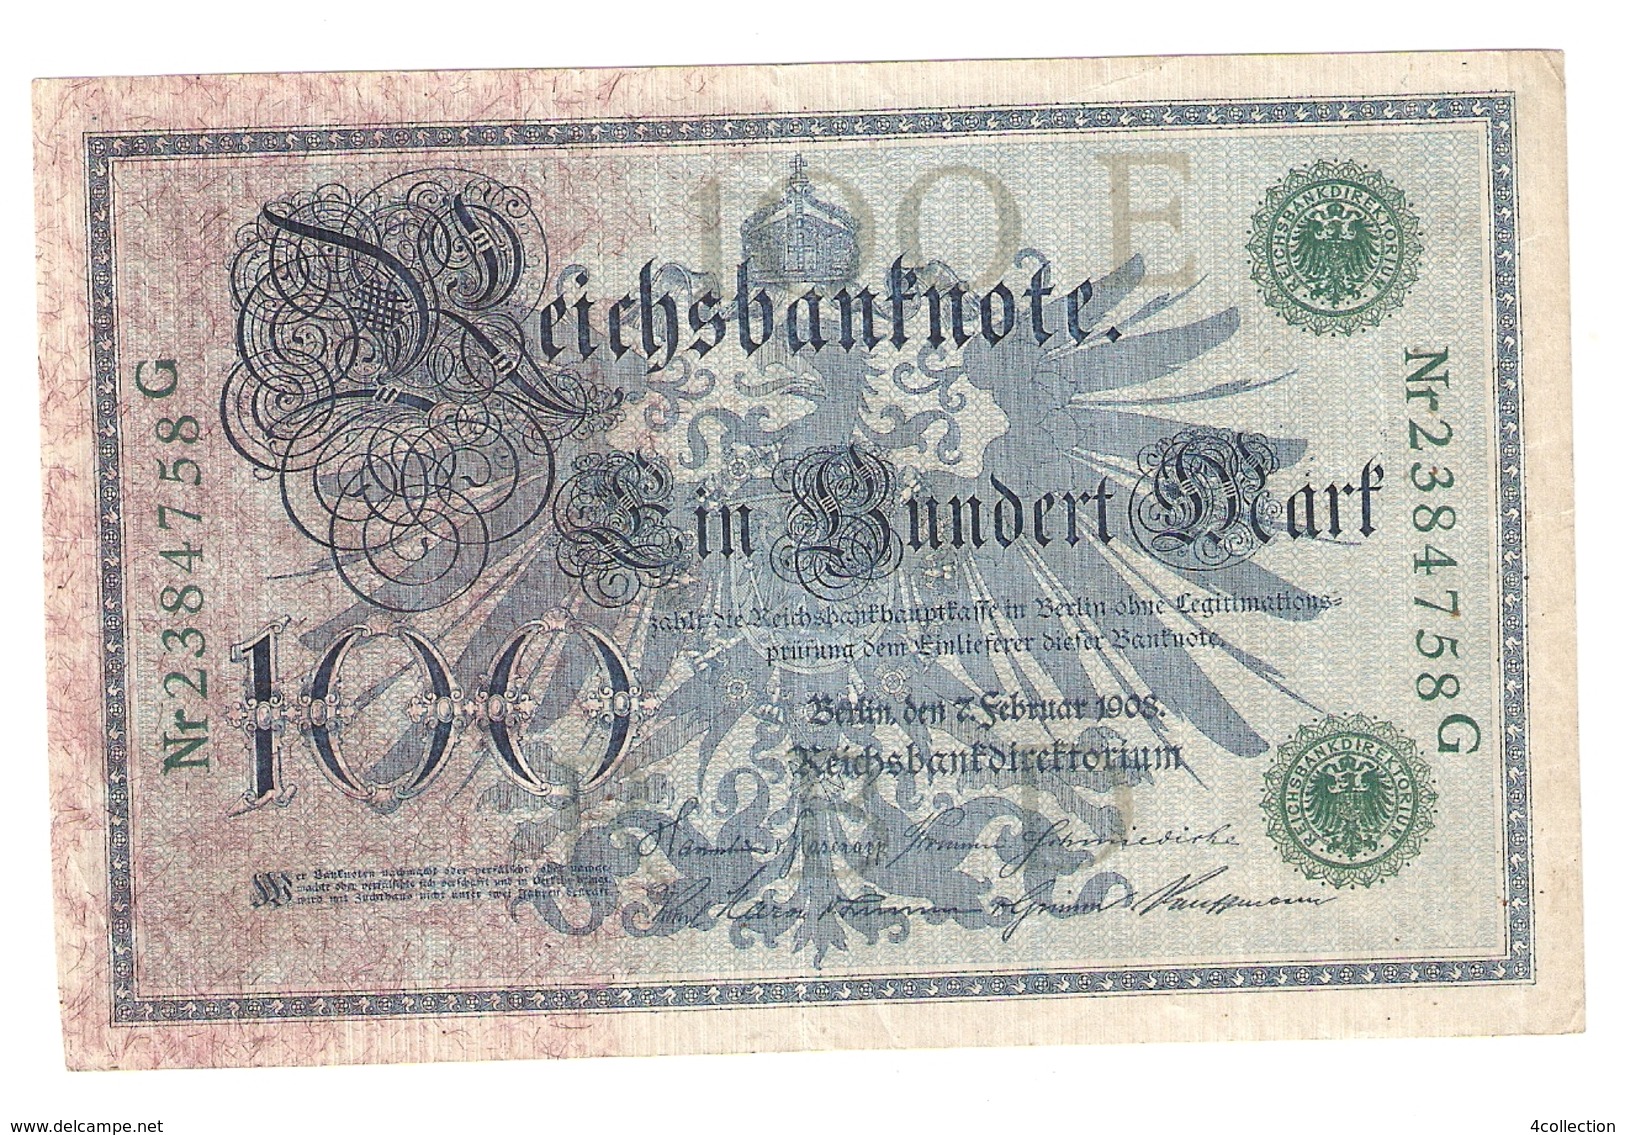 Pa6. Germany German Empire 100 Mark 1908 Reichsbanknote Green Seal & Ser. 2384758 G - 100 Mark